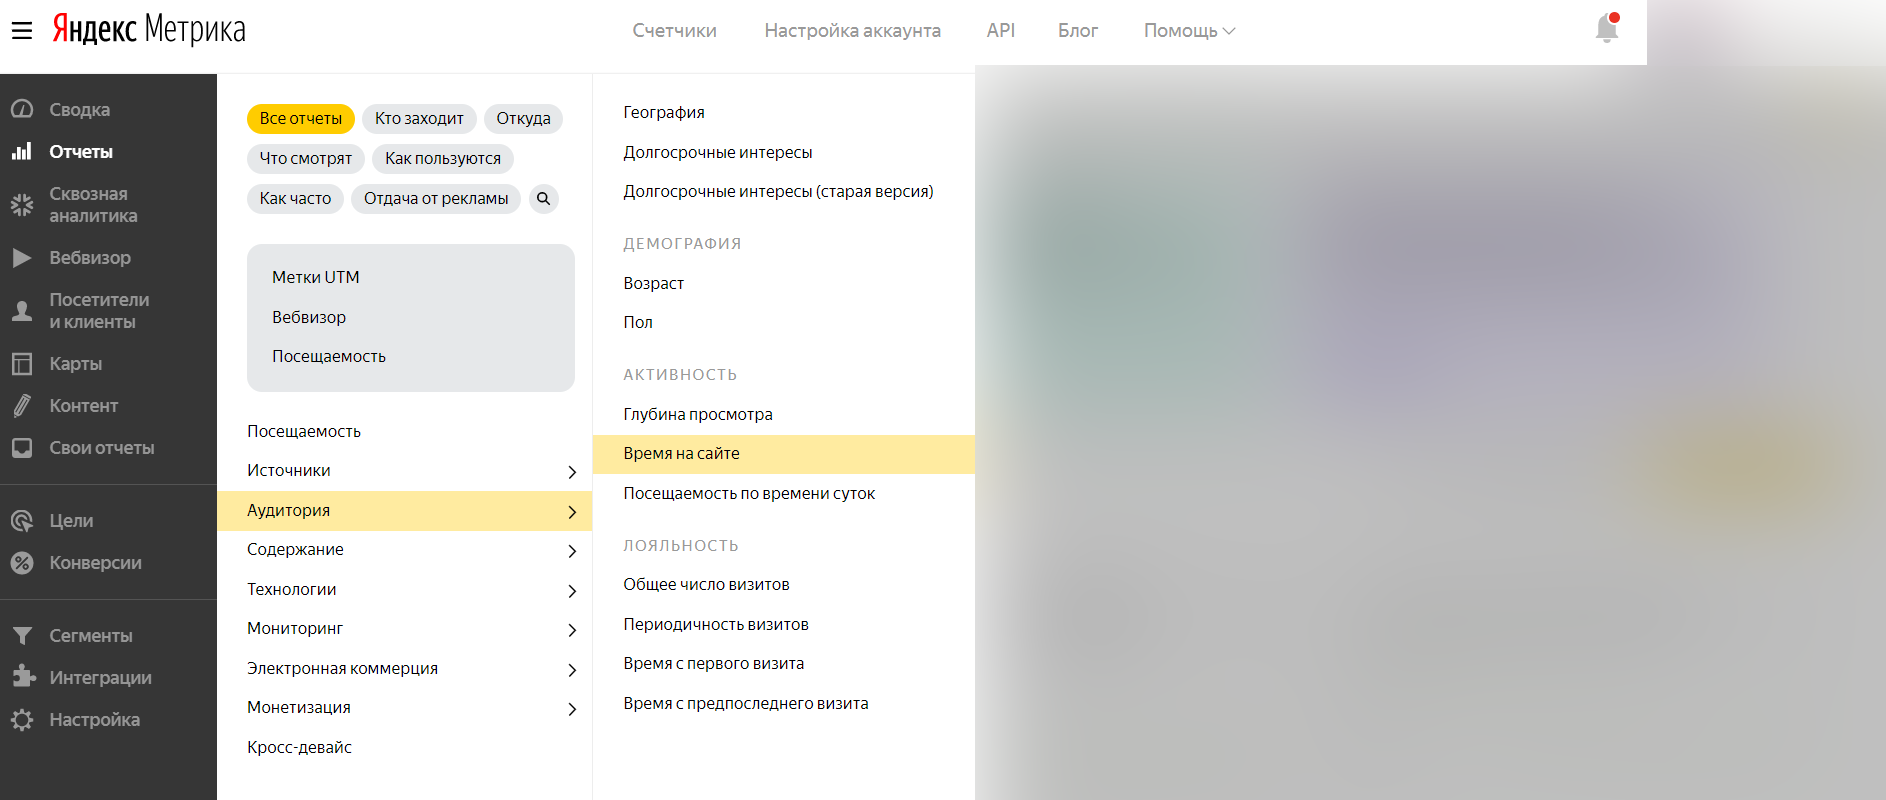 Отчет Время на сайте в «Яндекс.Метрике»